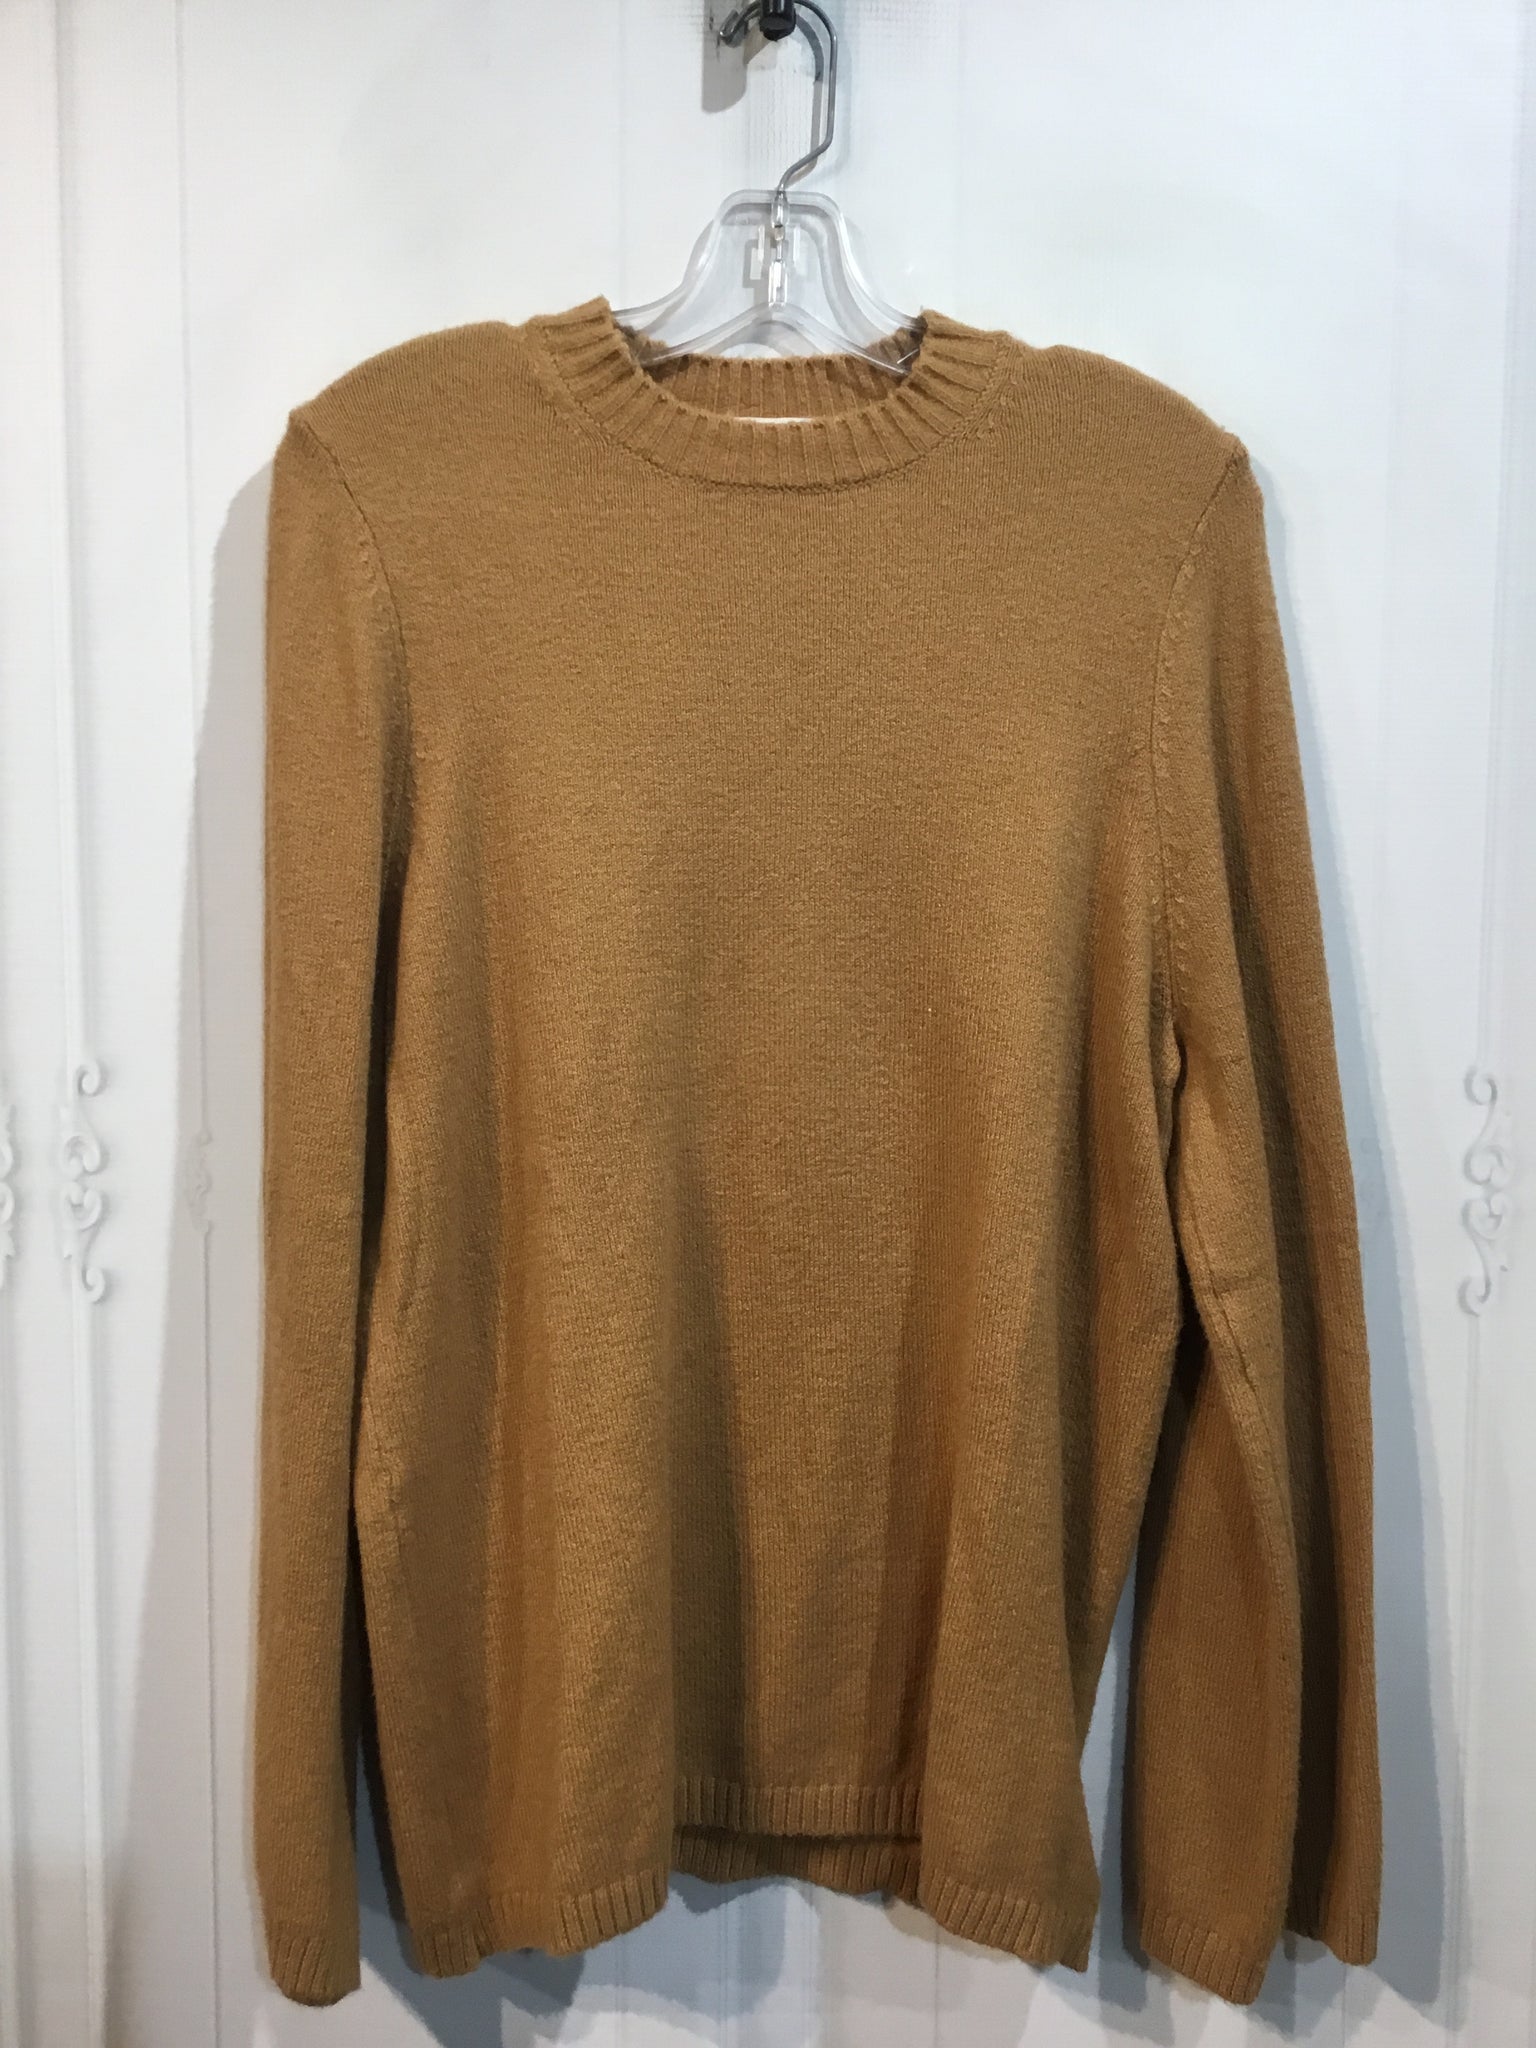 Treasure & Bond Size XXS/00 Camel Sweater